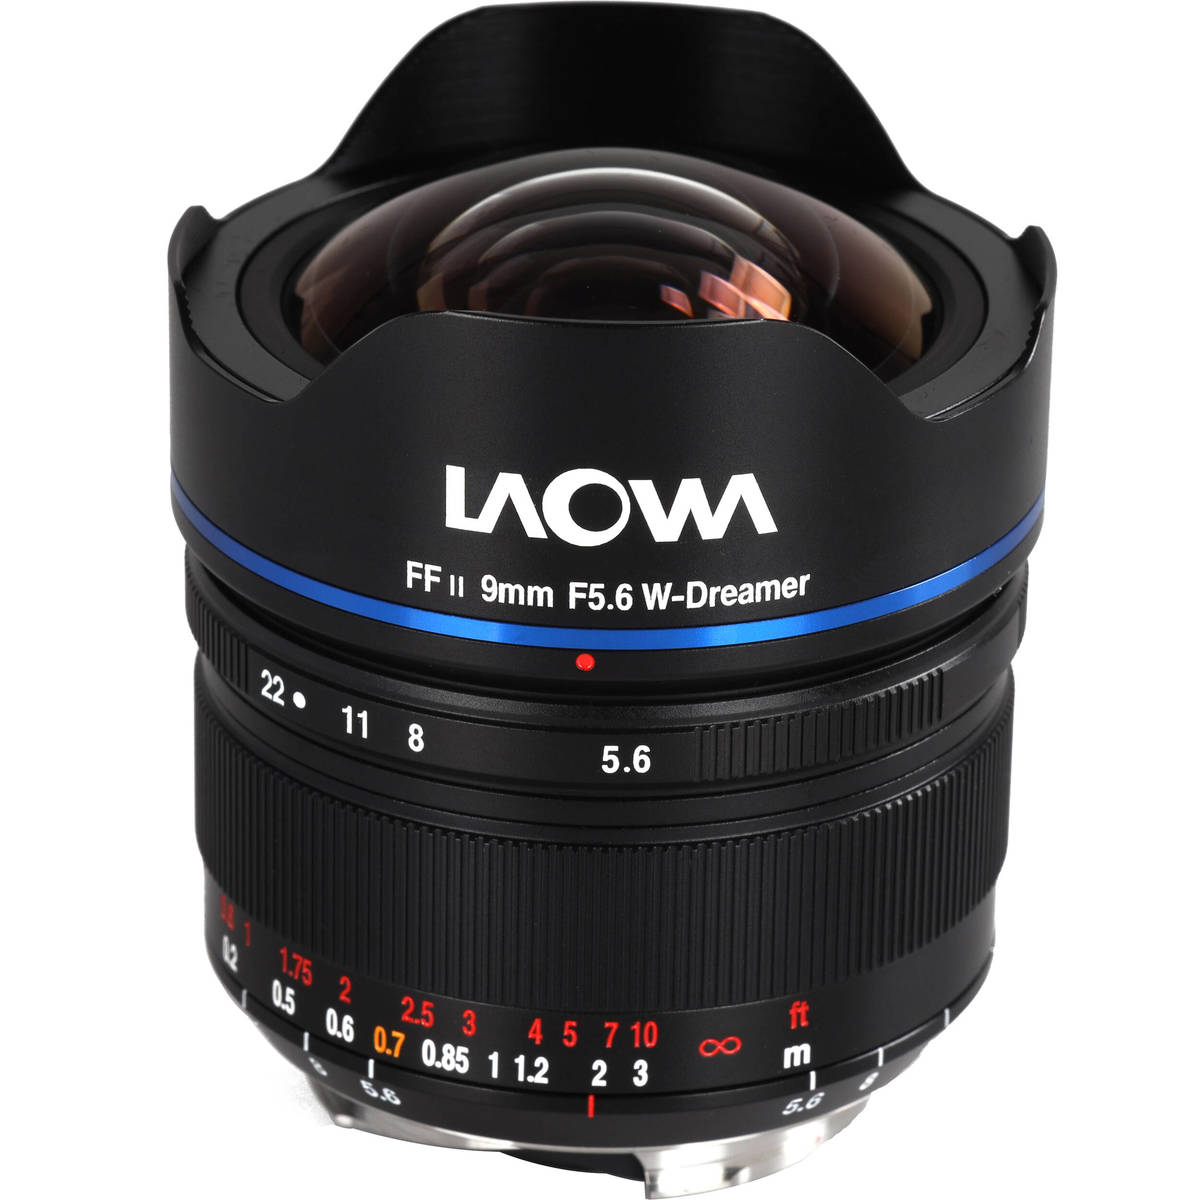 Laowa Lens 9mm f/5.6 W-Dreamer FF RL (Leica M) Black